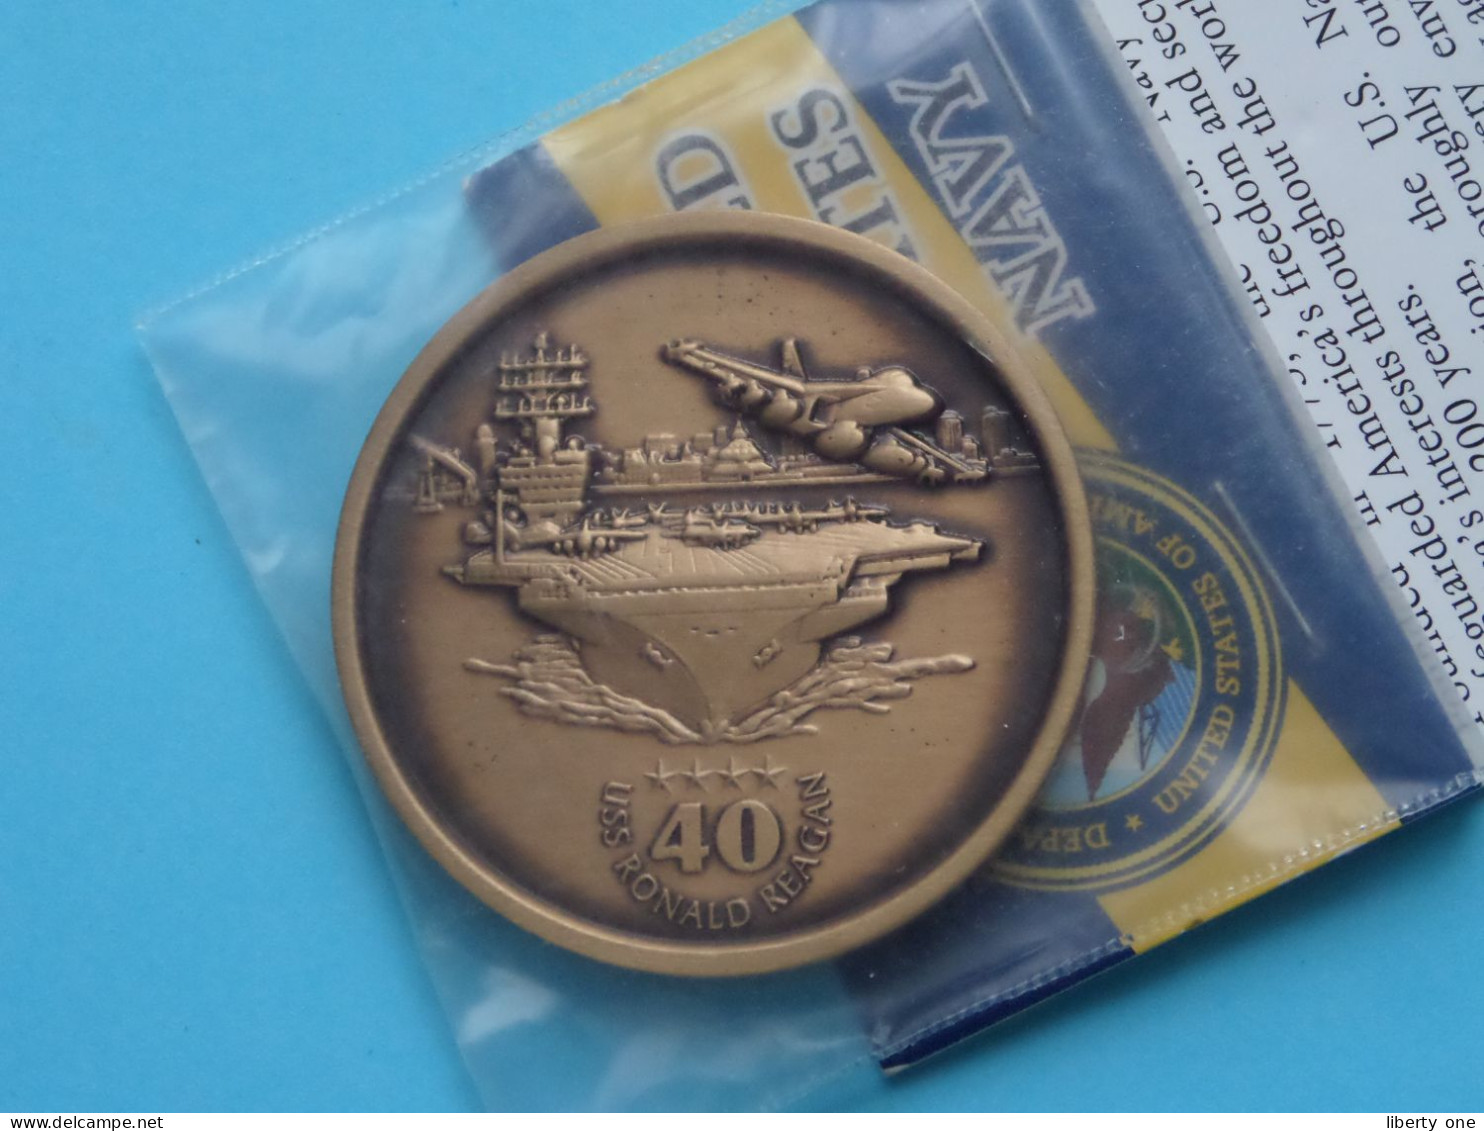 United States Navy - CVN76 " USS RONALD REAGAN " ( UNC > See SCANS ) 47 Mm. : +/- 60 Gr. ( NWT Mint Auburn WA )! - Souvenirmunten (elongated Coins)